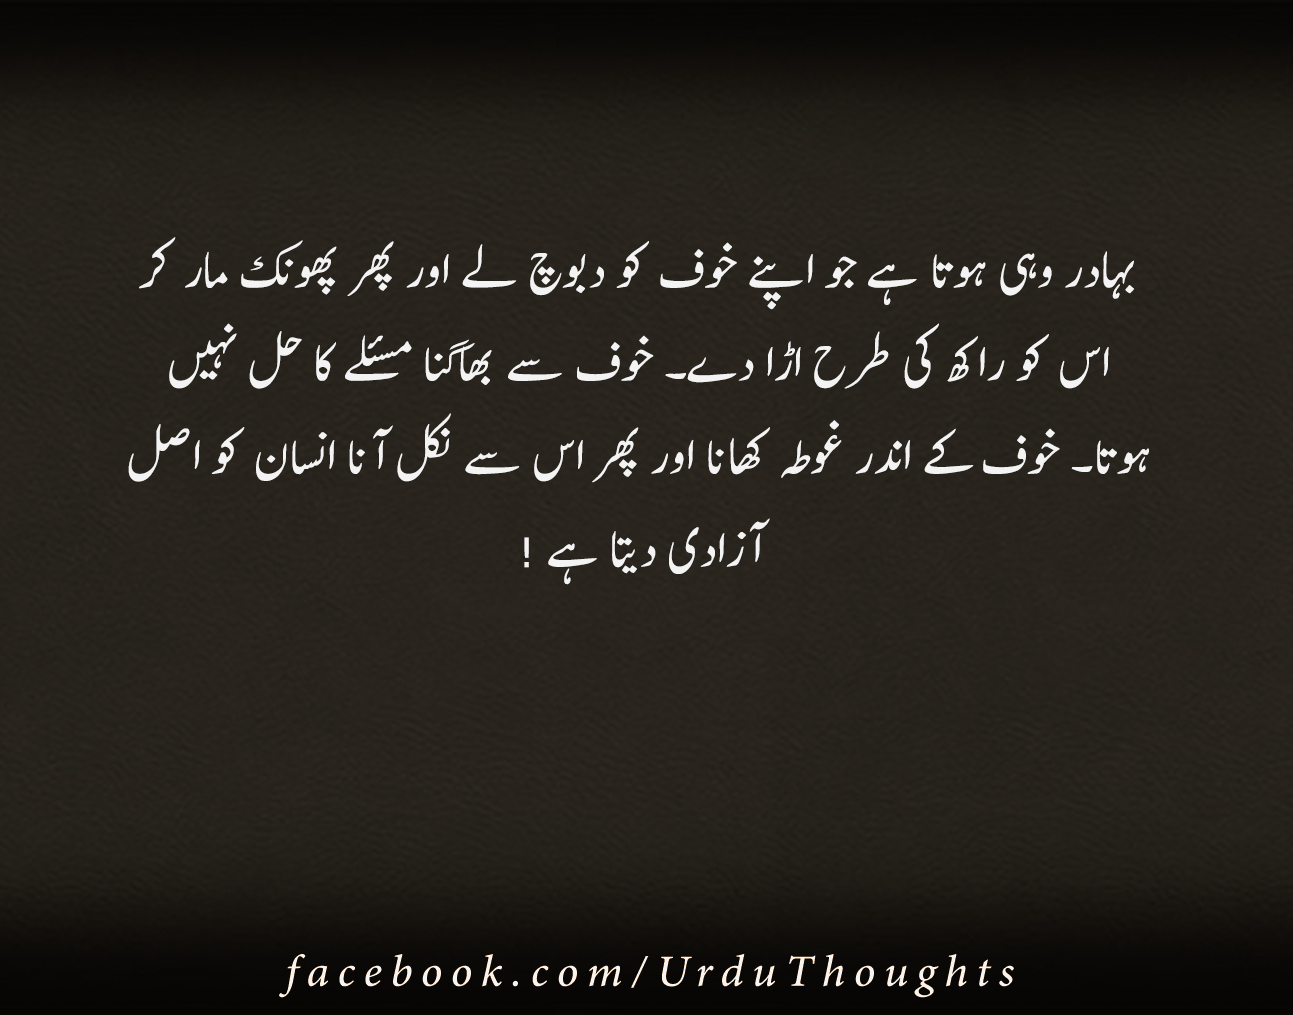 famous Urdu quotes Urdu quotes in Hindi Urdu quotes with images quotations of novel in urdu Hindi quotes high quality images with urdu quotes hd